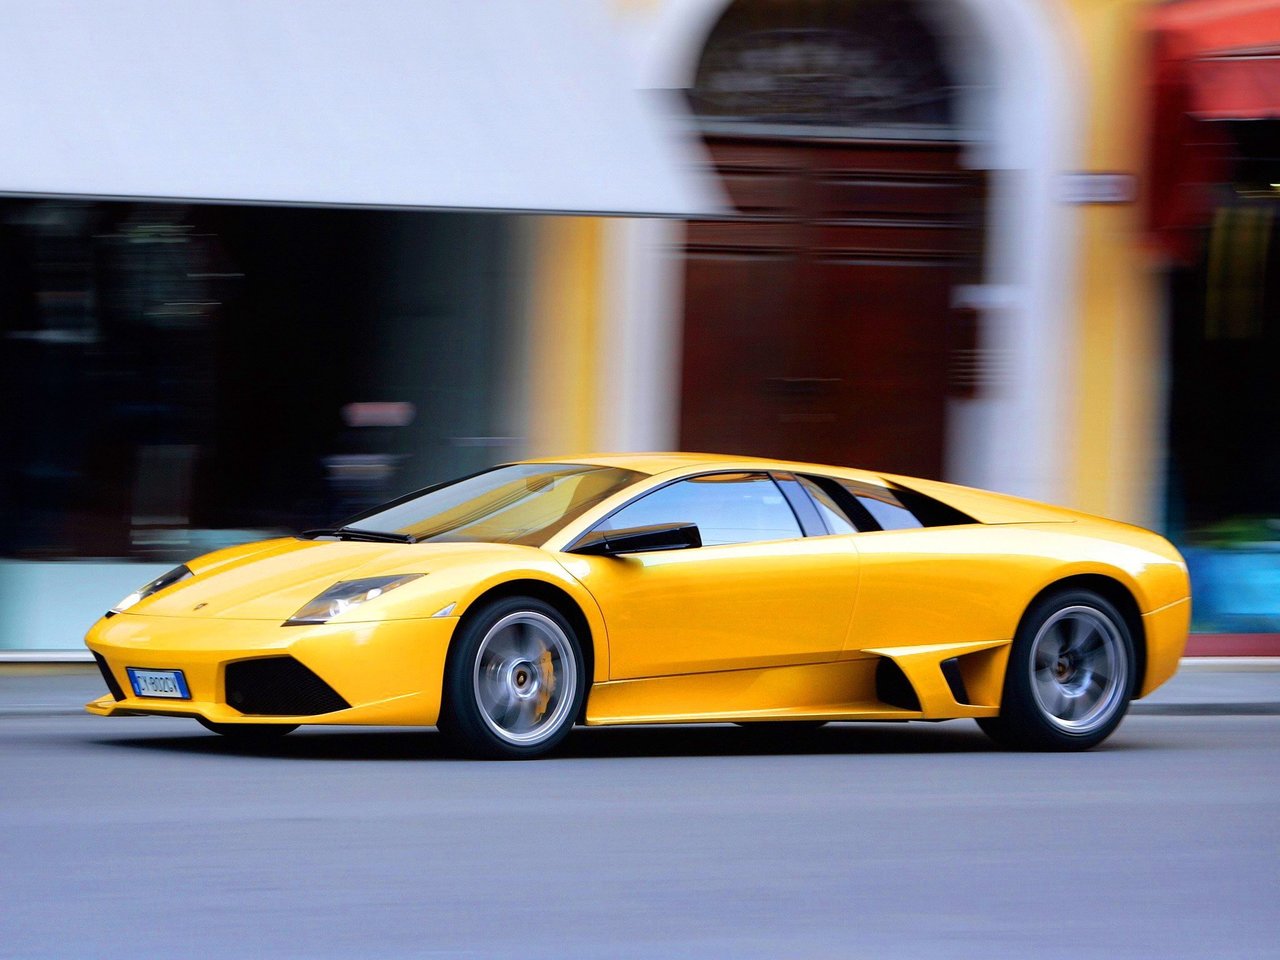 Расход газа трёх комплектаций купе Lamborghini Murcielago. Разница стоимости заправки газом и бензином. Автономный пробег до и после установки ГБО.